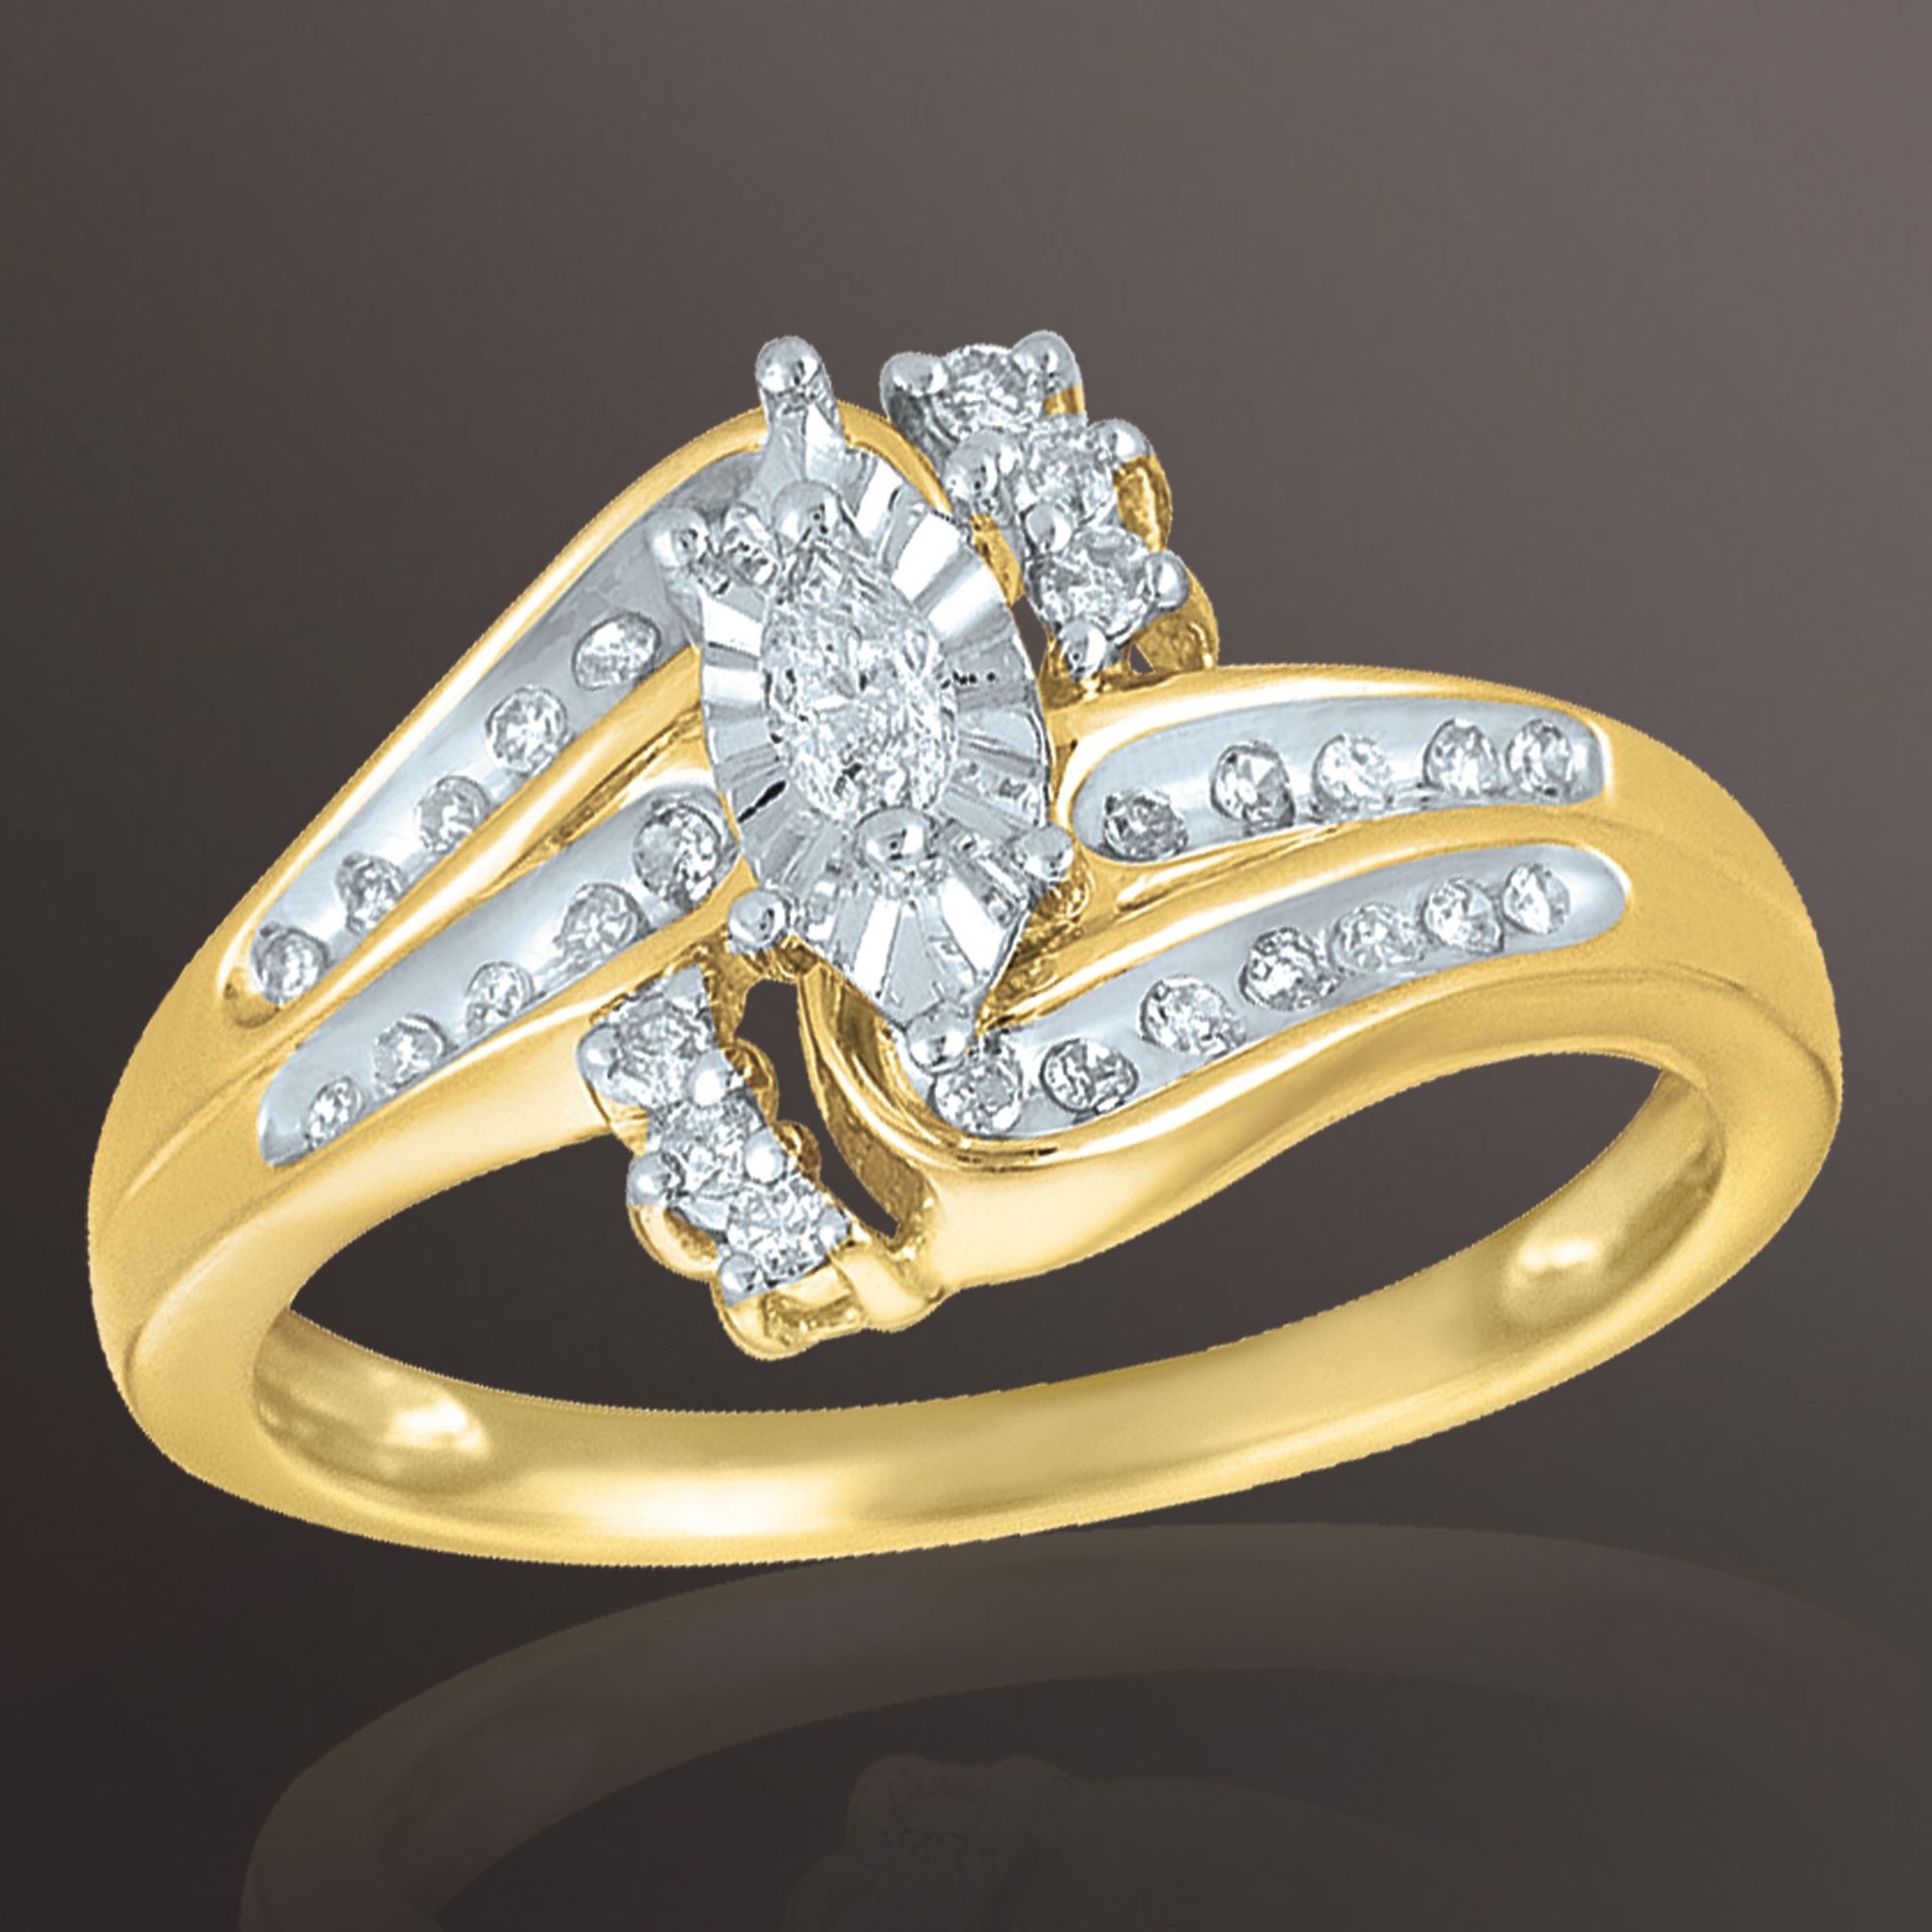 Everlasting Love 1/4 cttw Diamond Swirl Bridal Set in 10k Yellow Gold_in Size 7